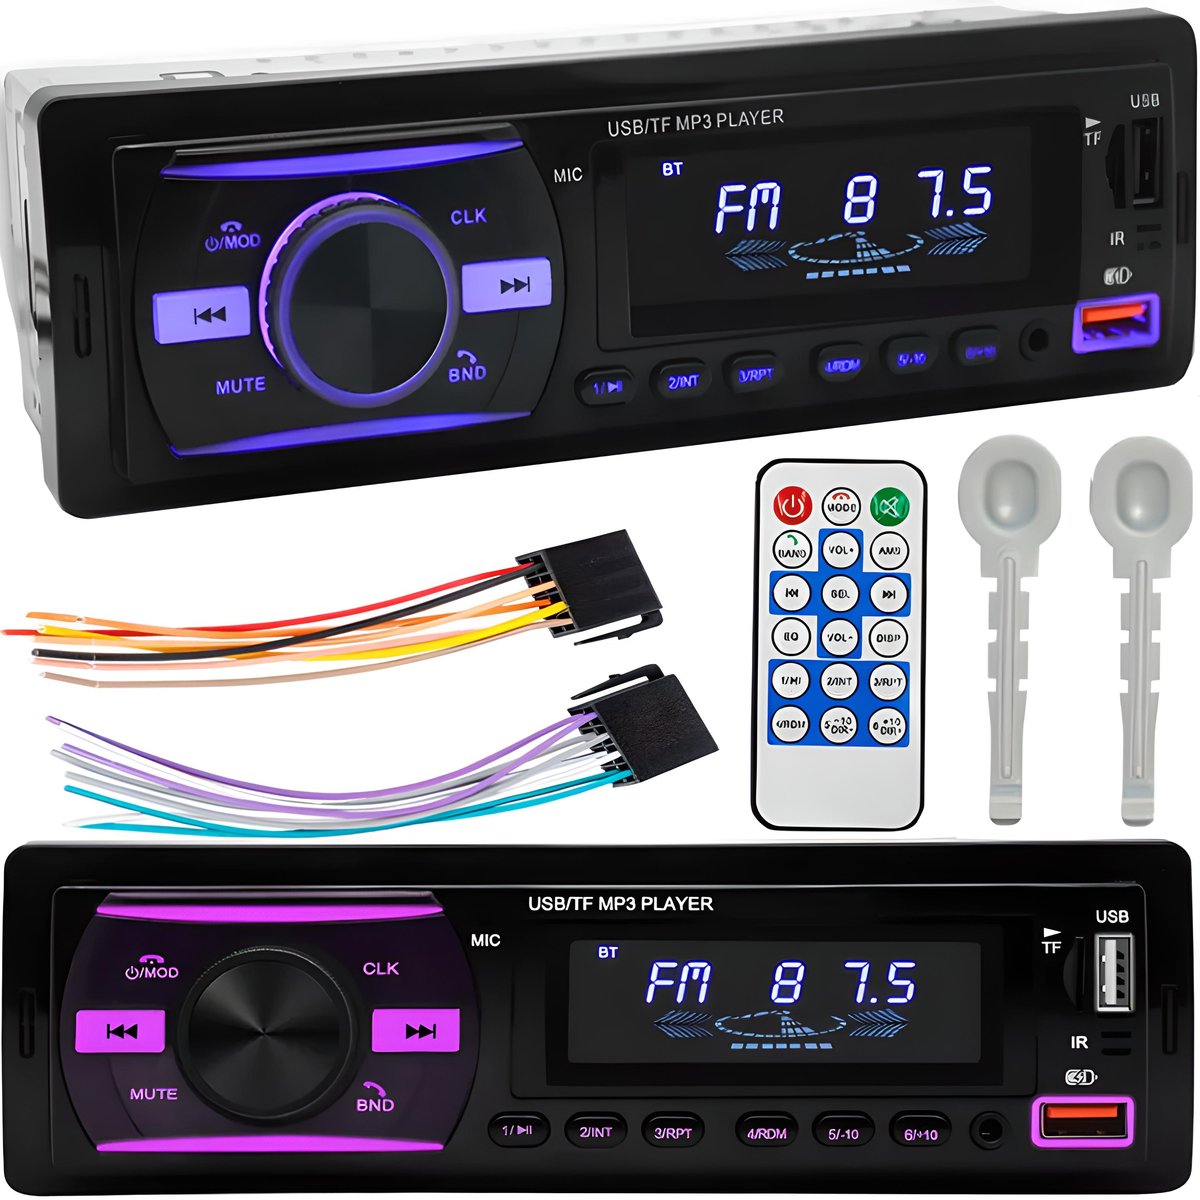 Car Radio with Bluetooth, SCT 5017BMR